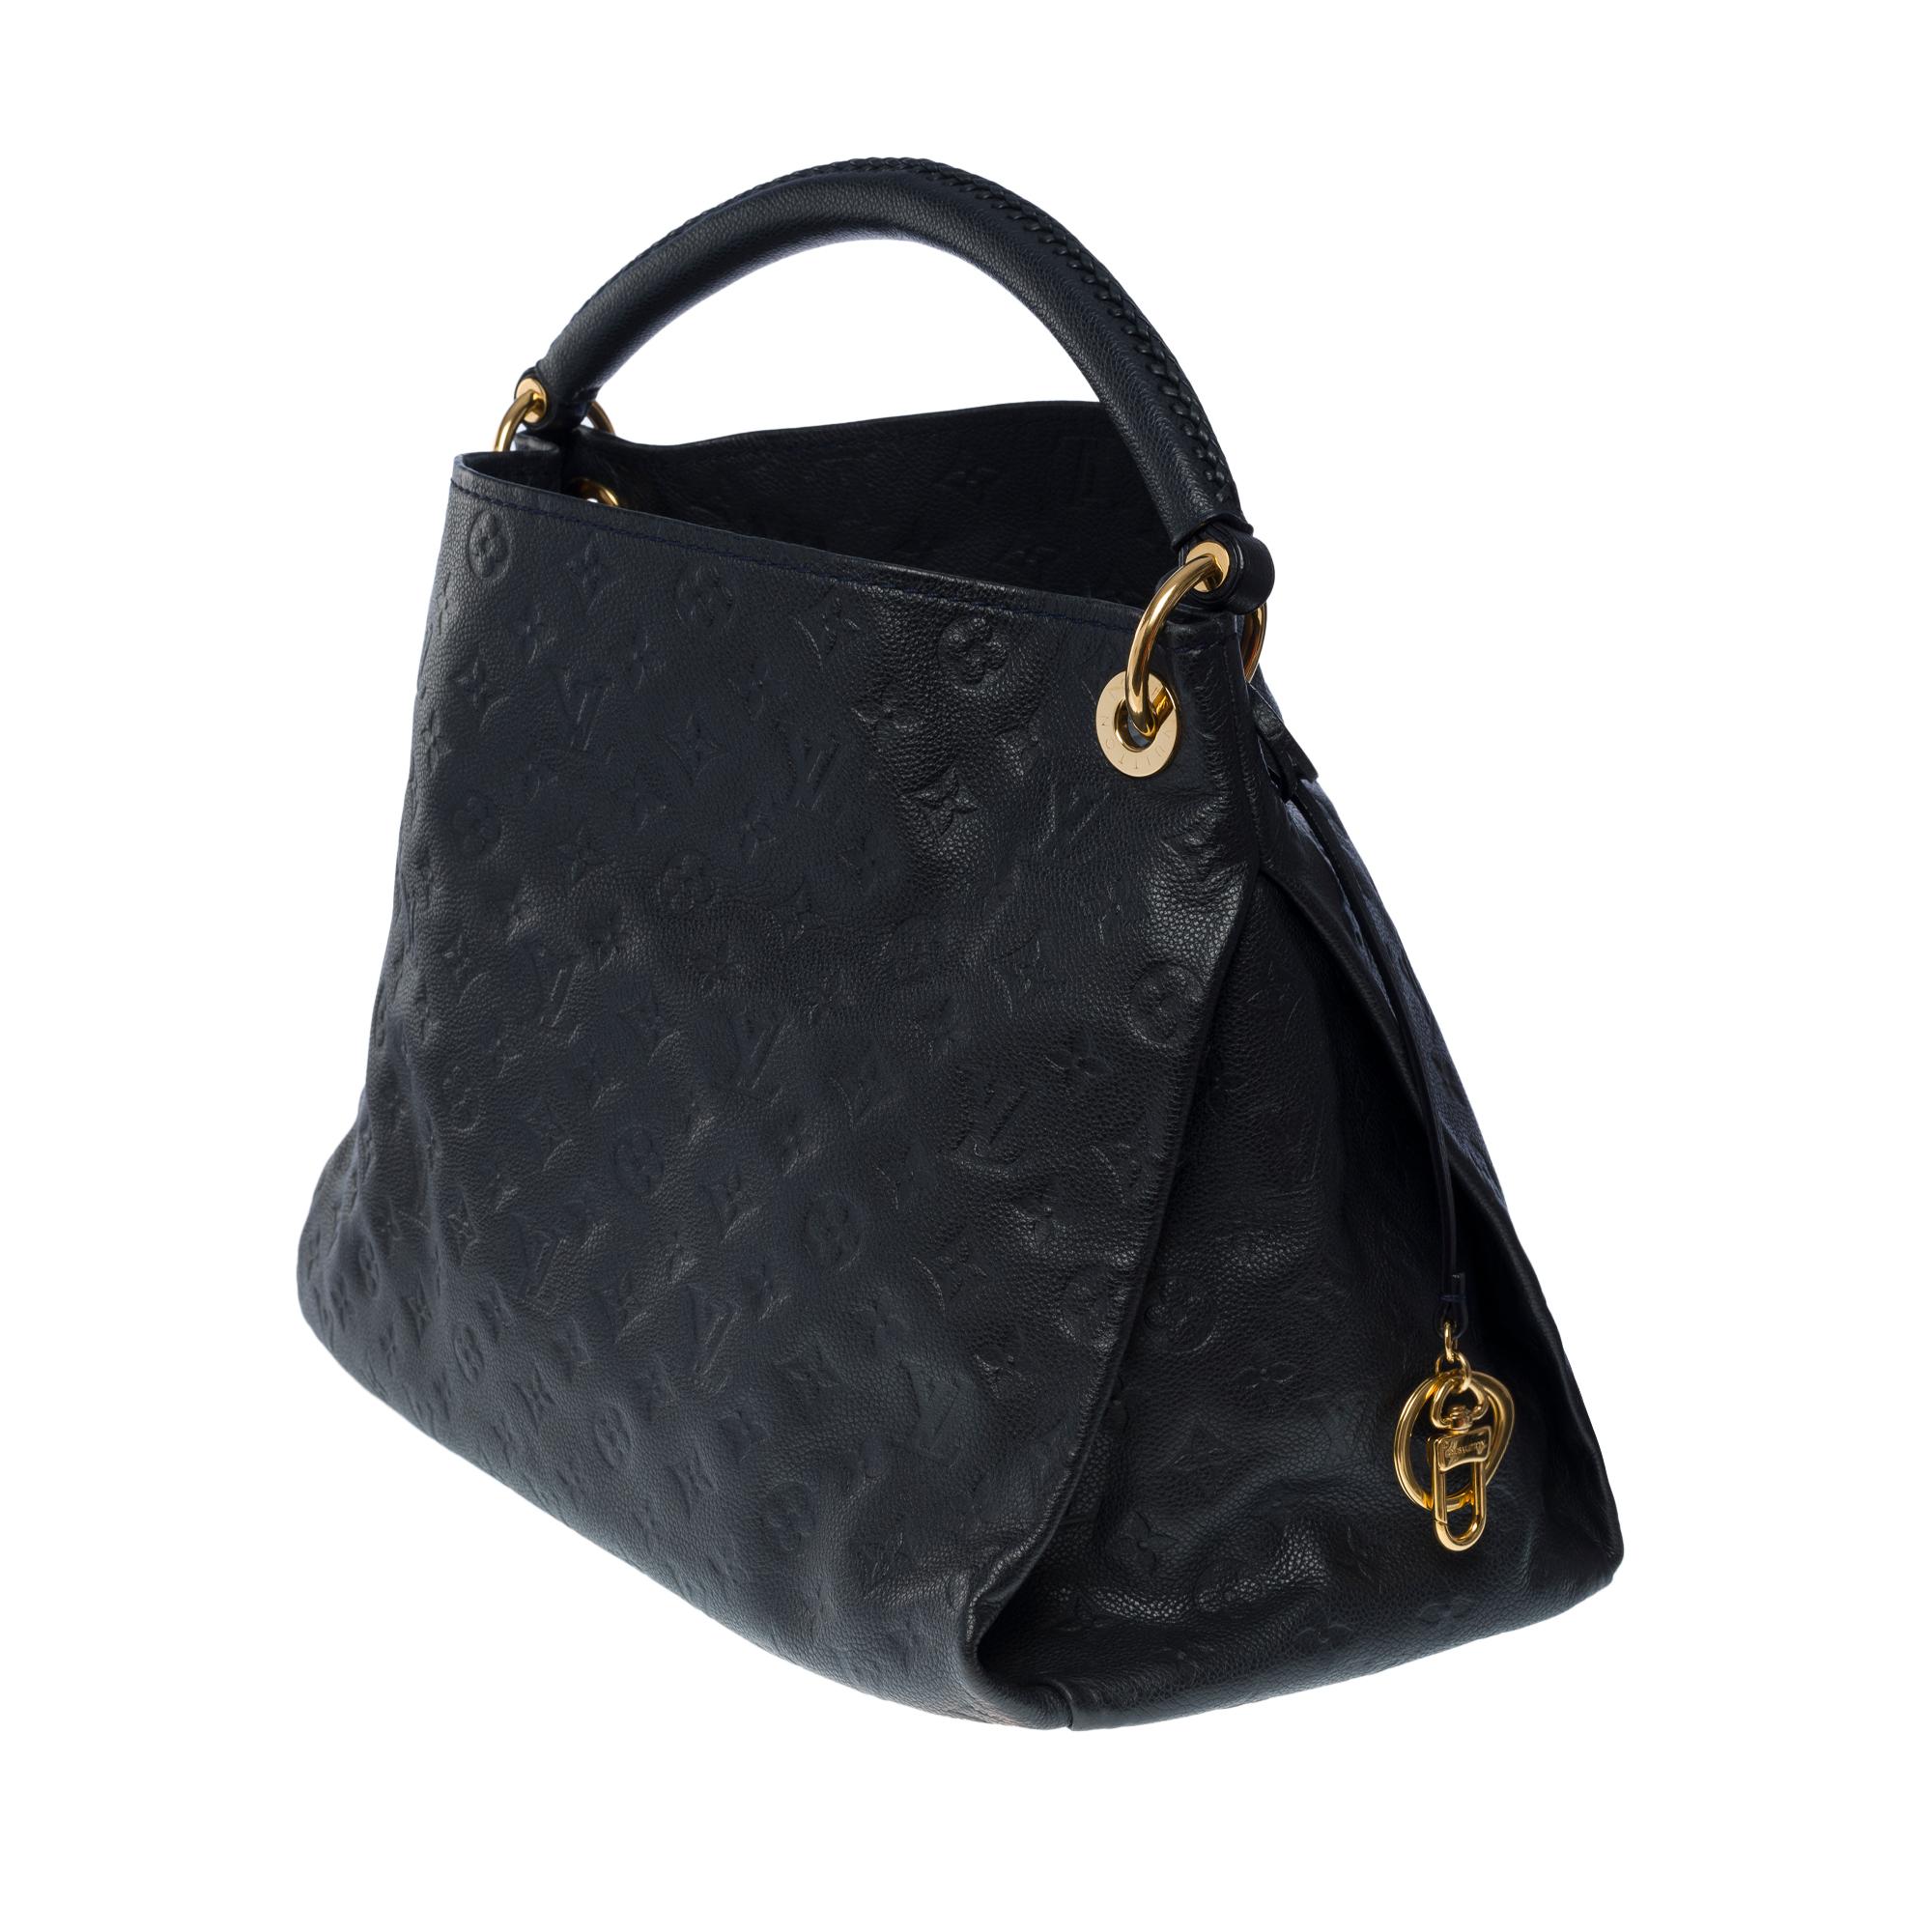 Women's Louis Vuitton Artsy MM Hobo bag in dark blue monogram calfskin leather, GHW